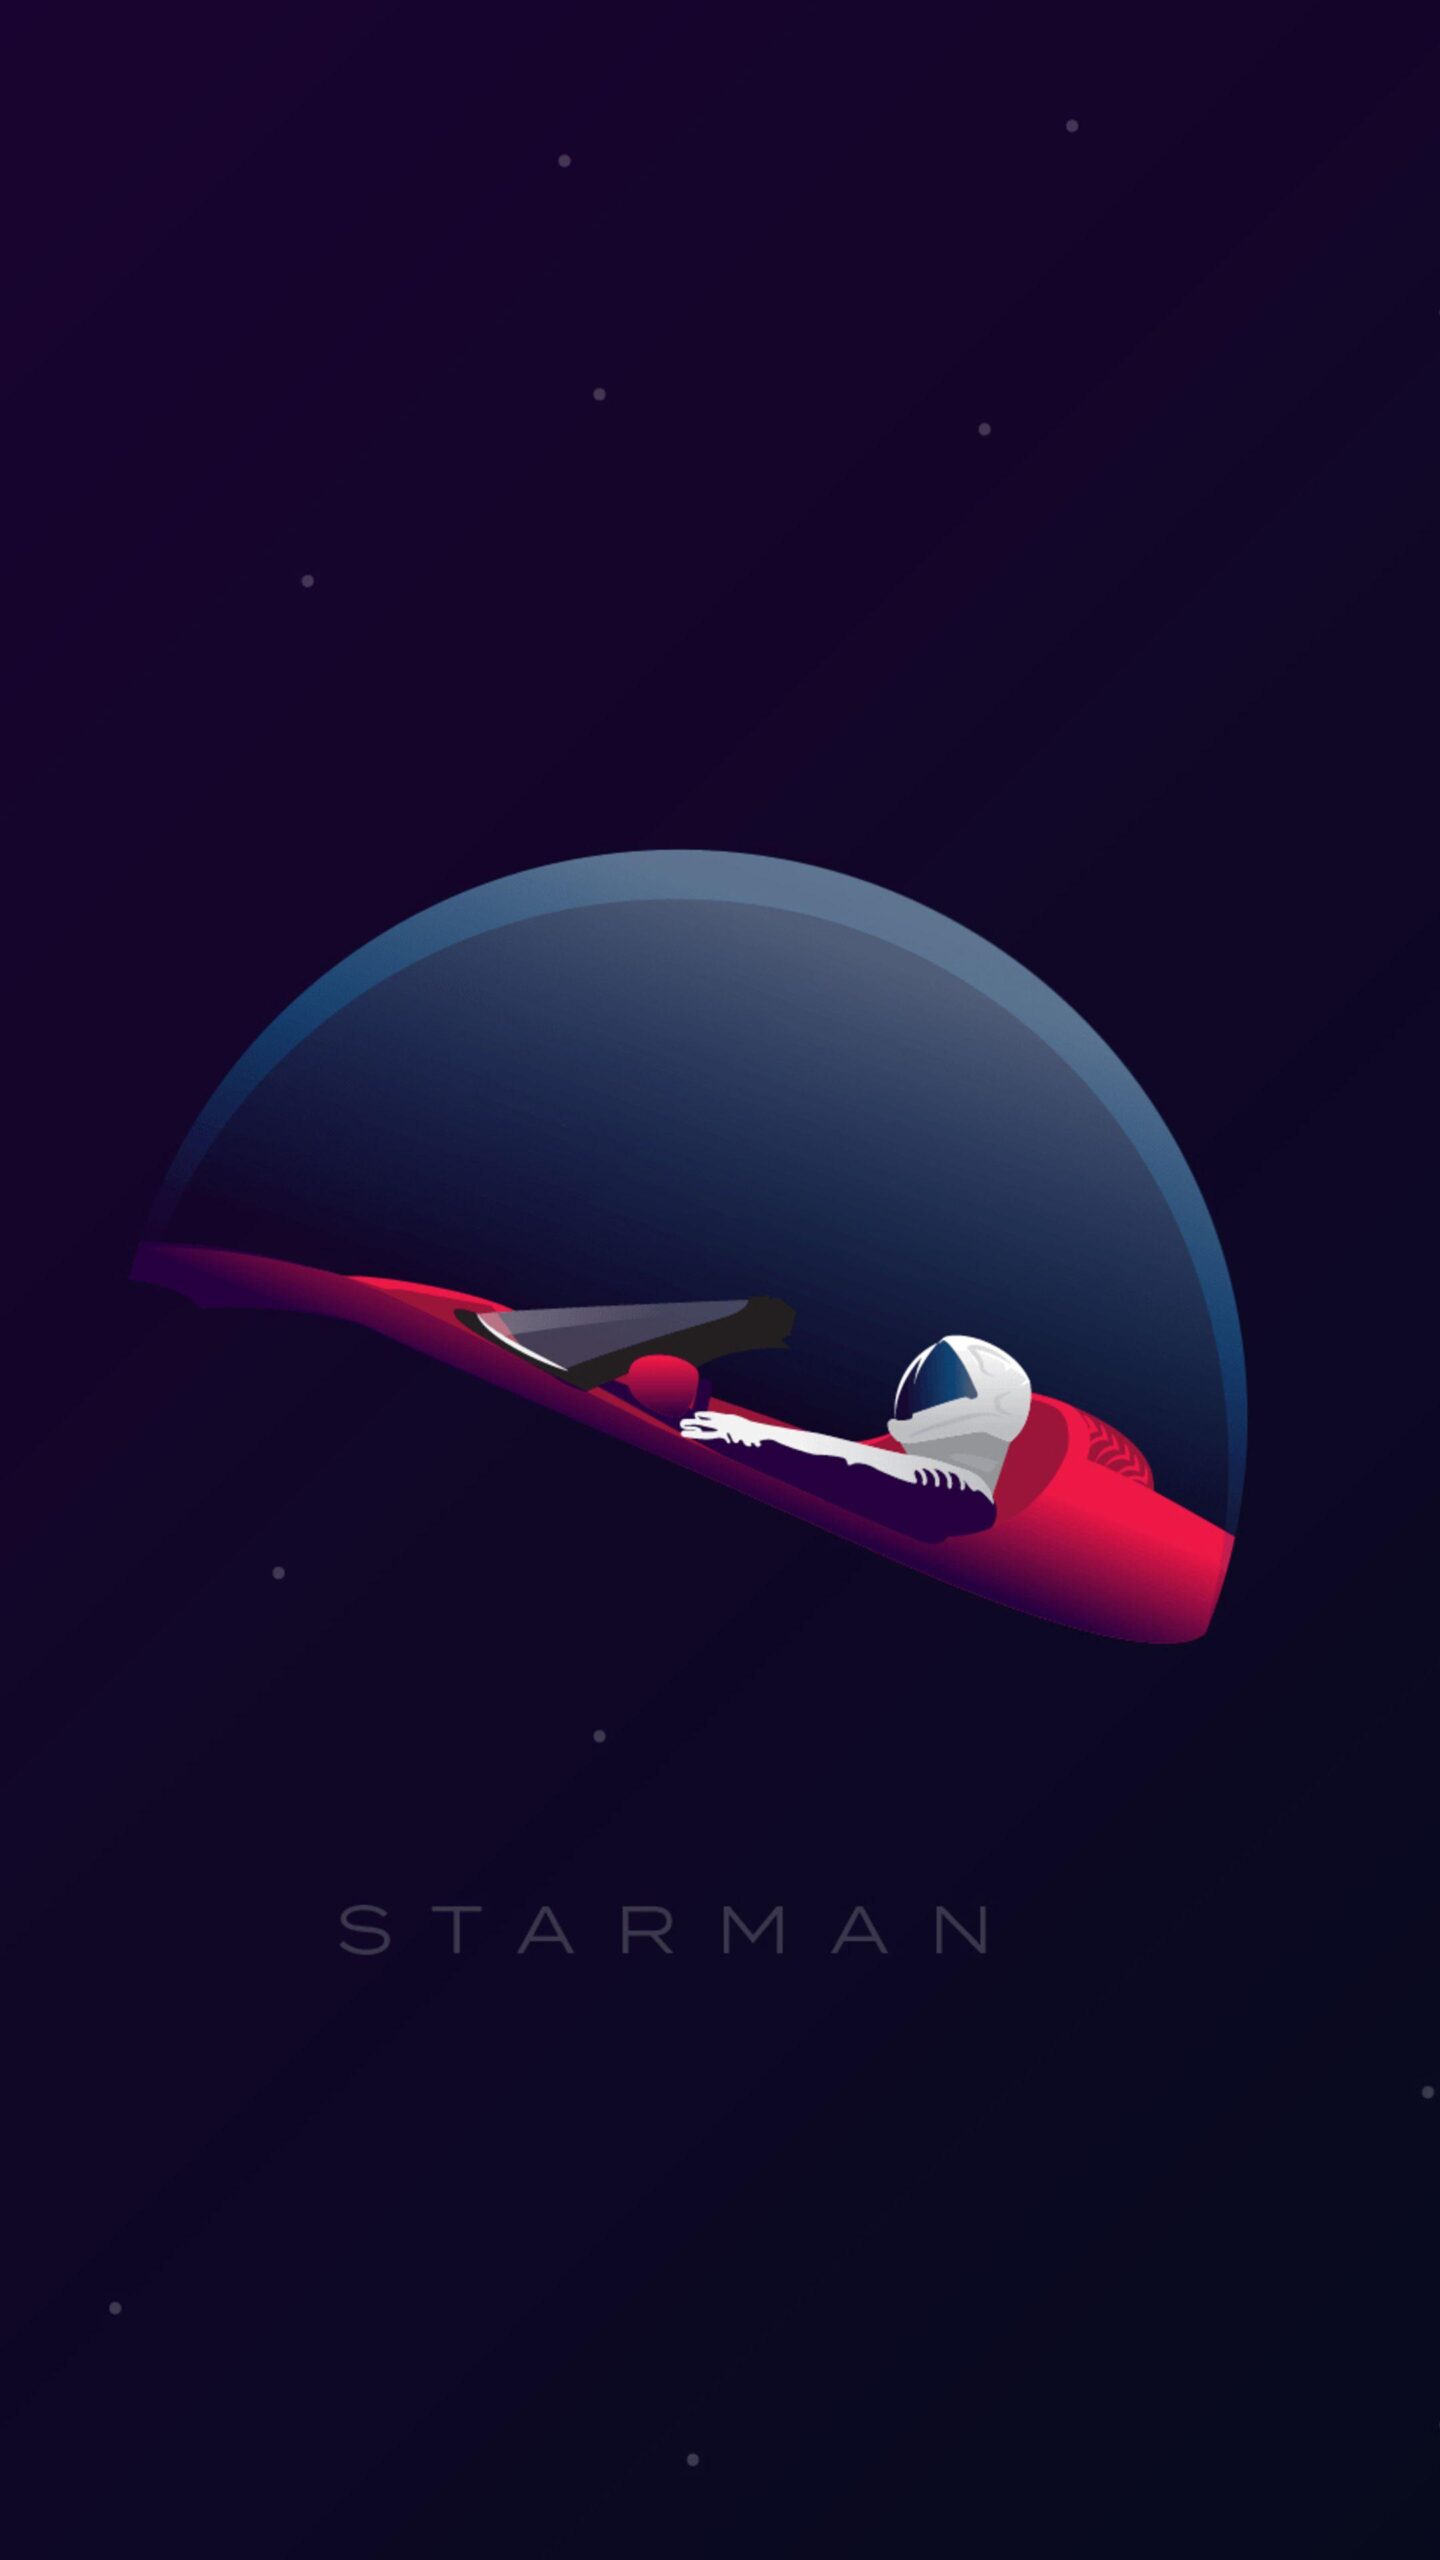 Starman Illustration In Resolution